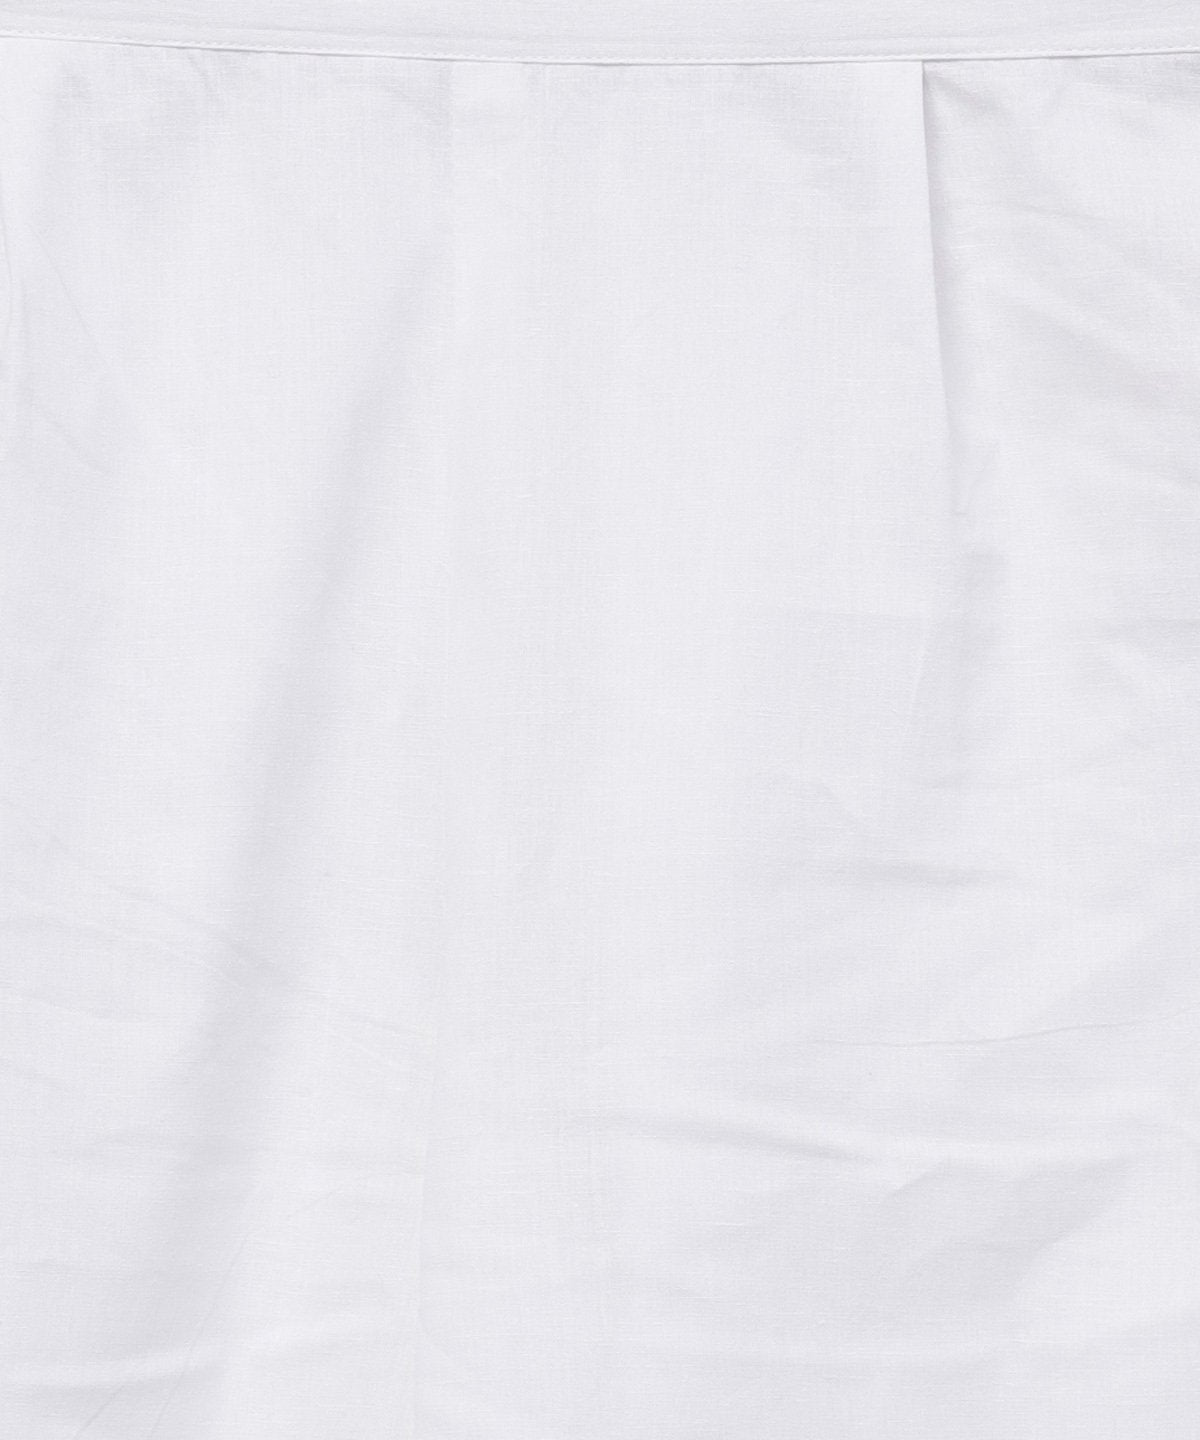 Women's Blue printed gathered A-line kurta with white palazzo - Nayo Clothing